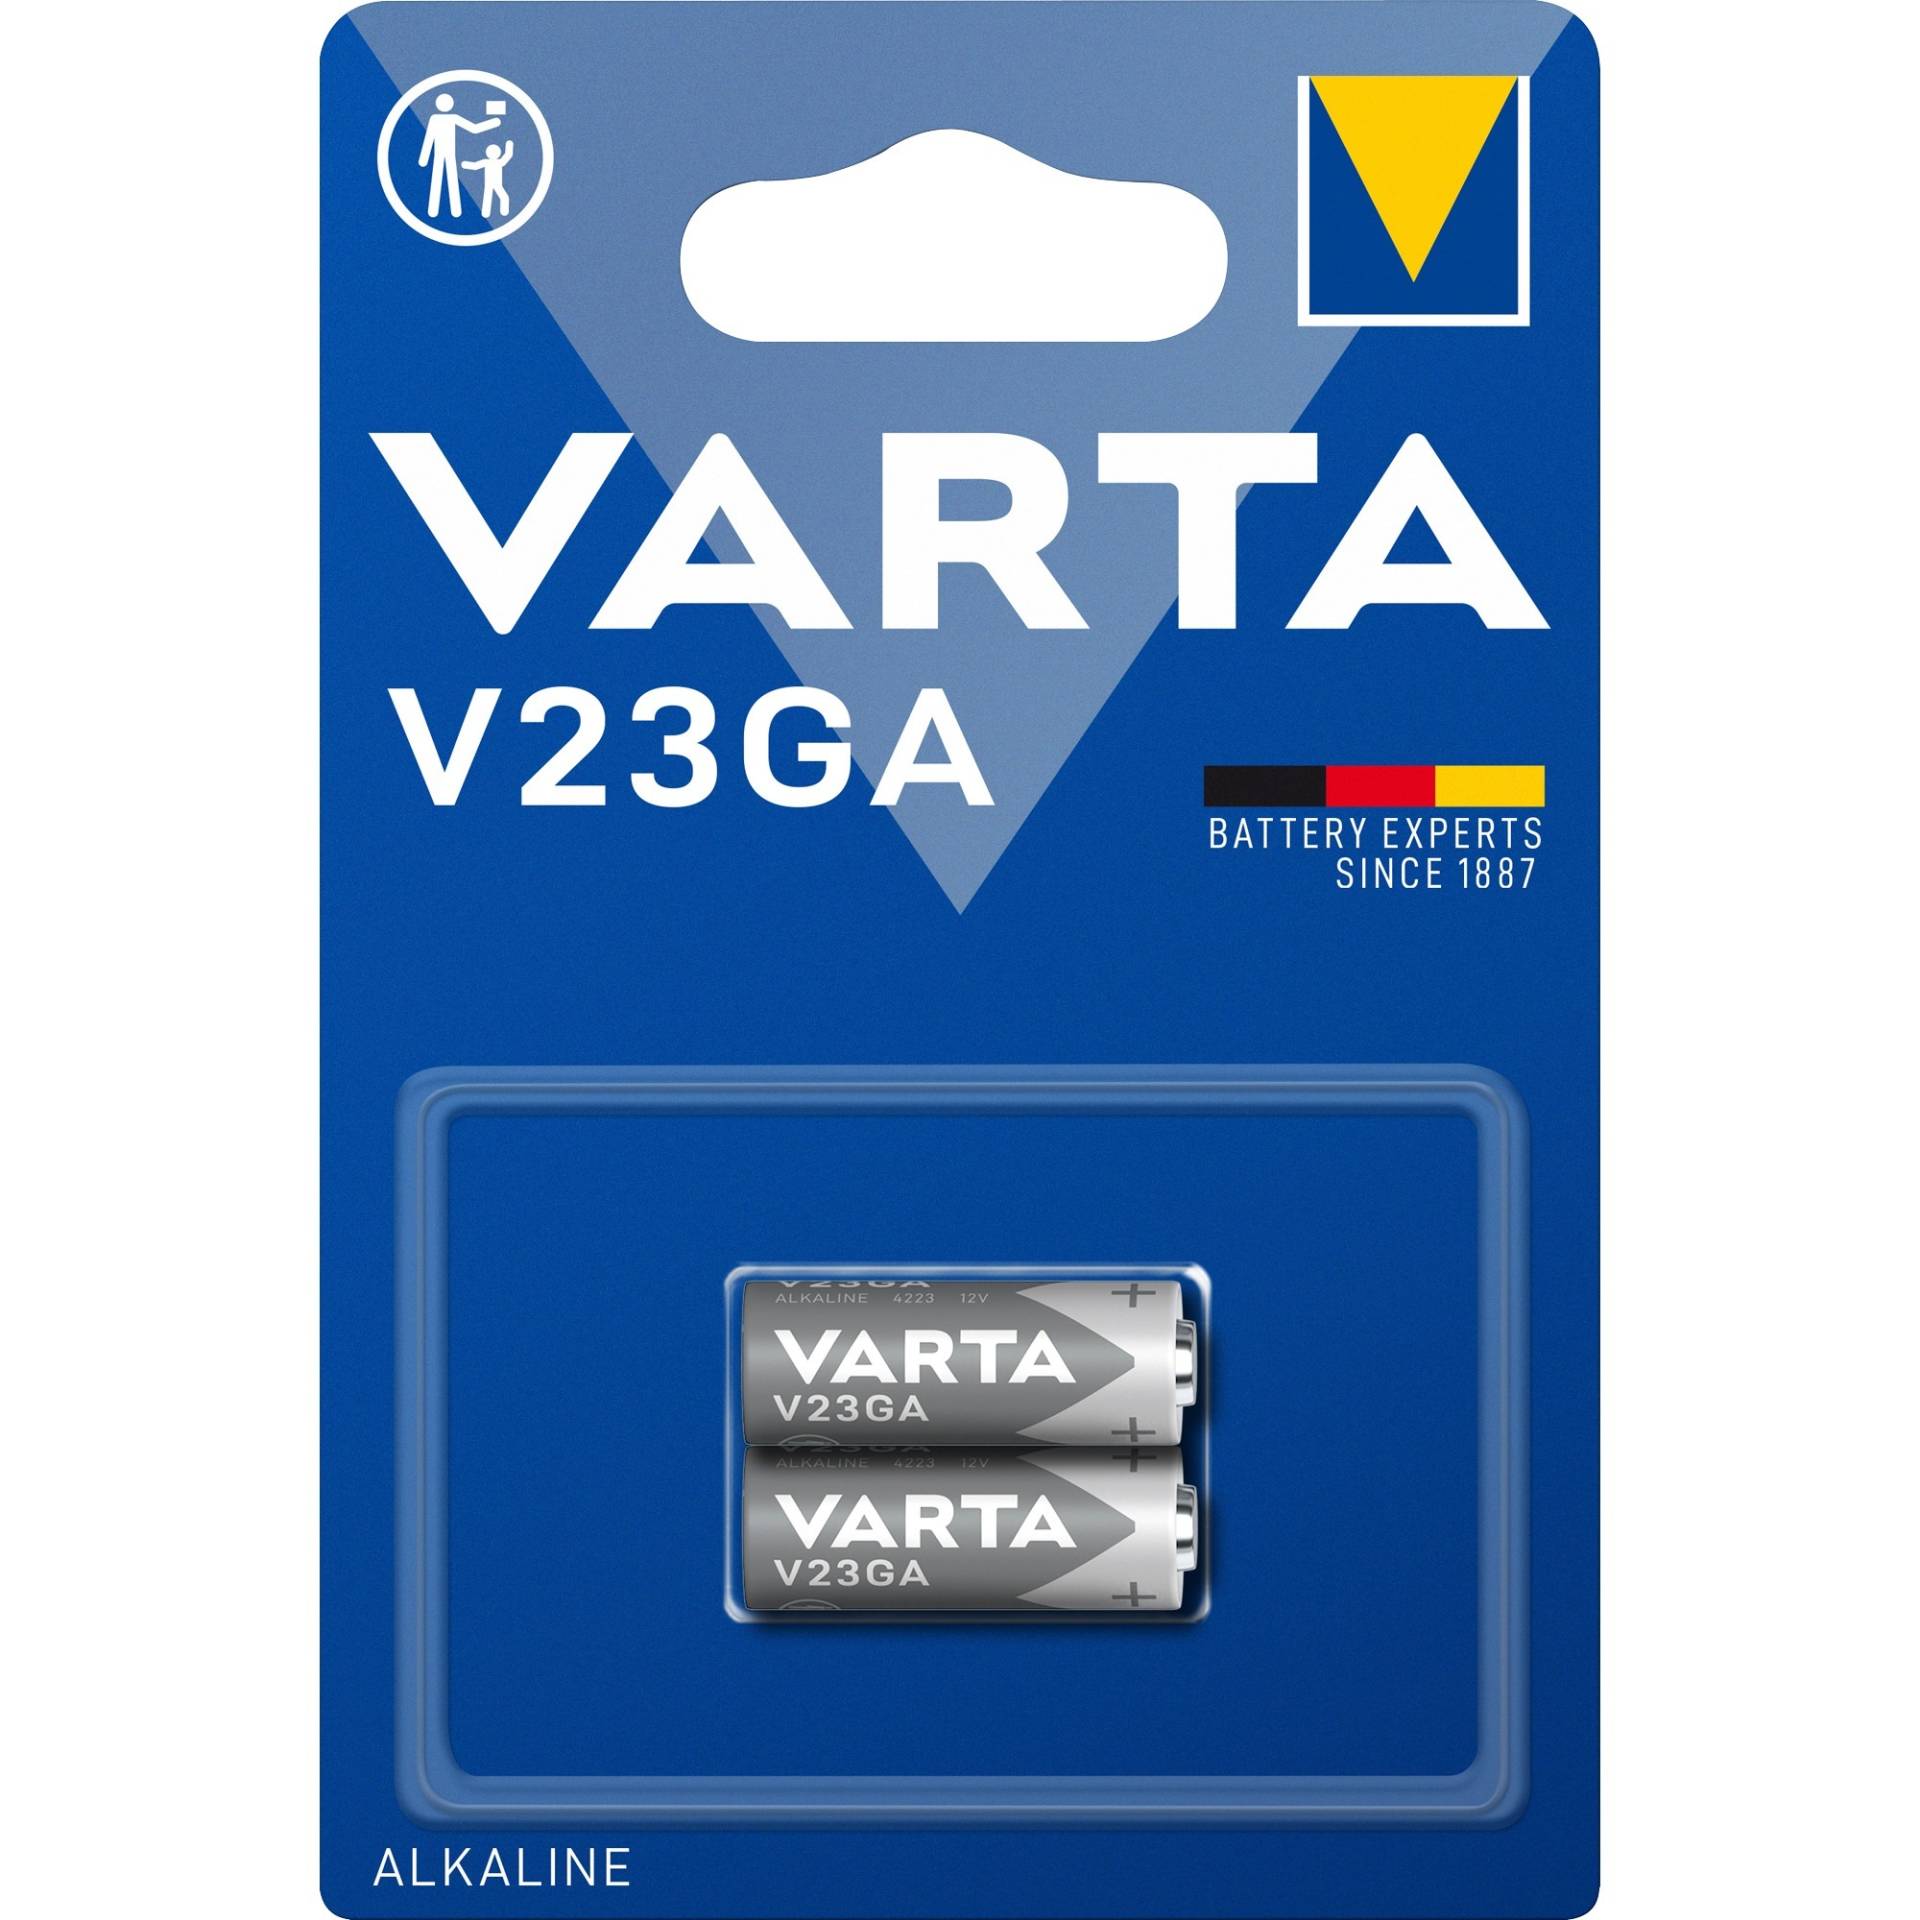 Professional Electronics, Batterie von Varta